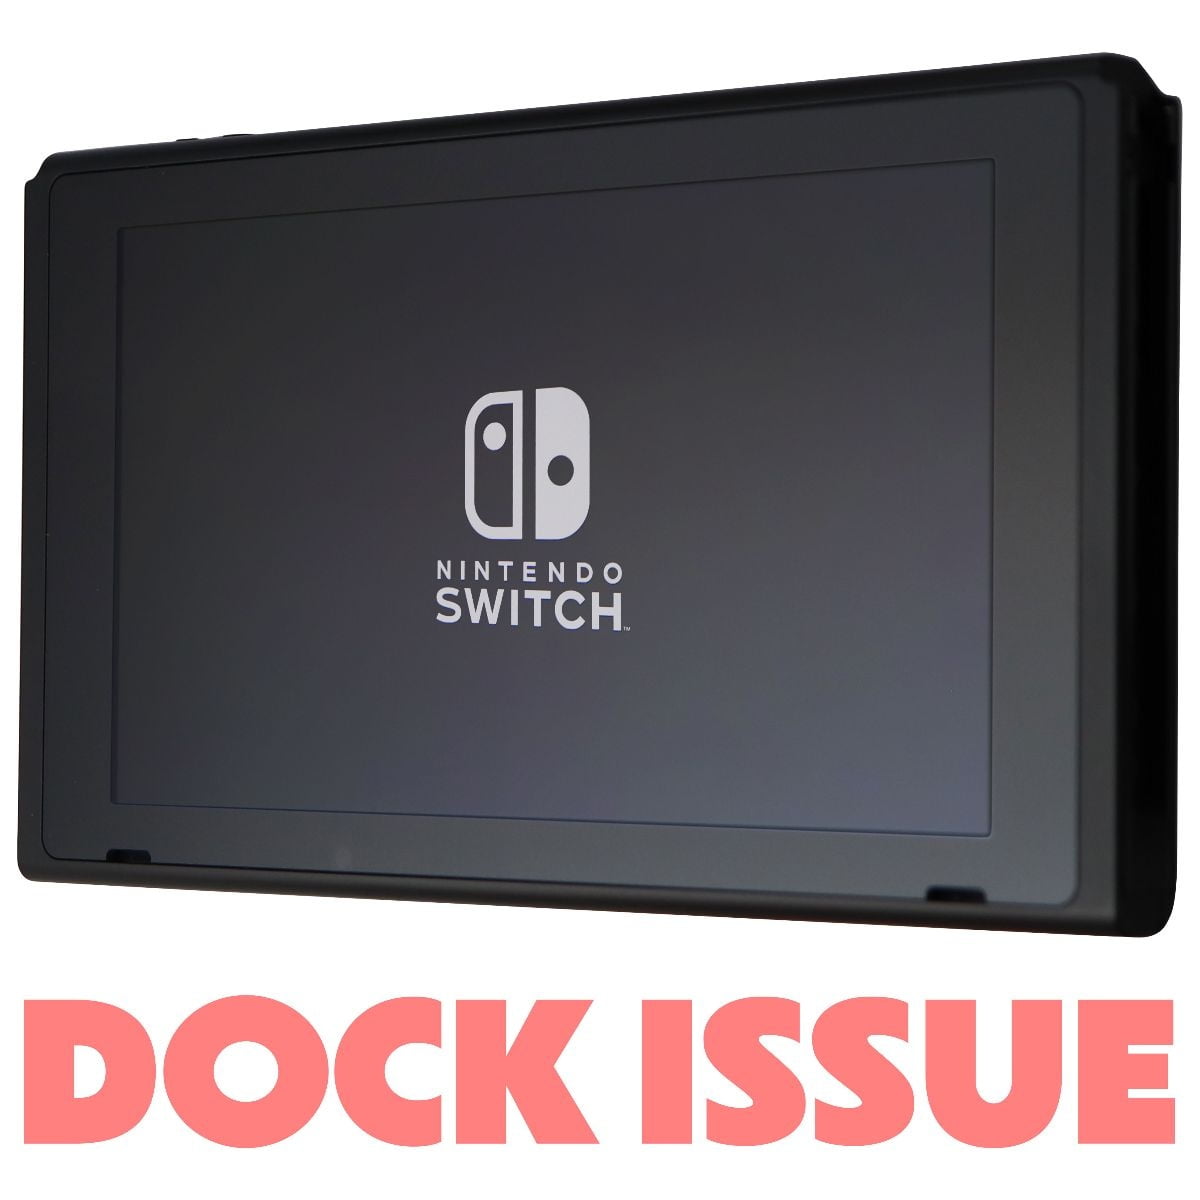 Dock ISSUE Nintendo Switch HAC-001(-01) Console 32GB/Animal Crossing (Used) - Walmart.com